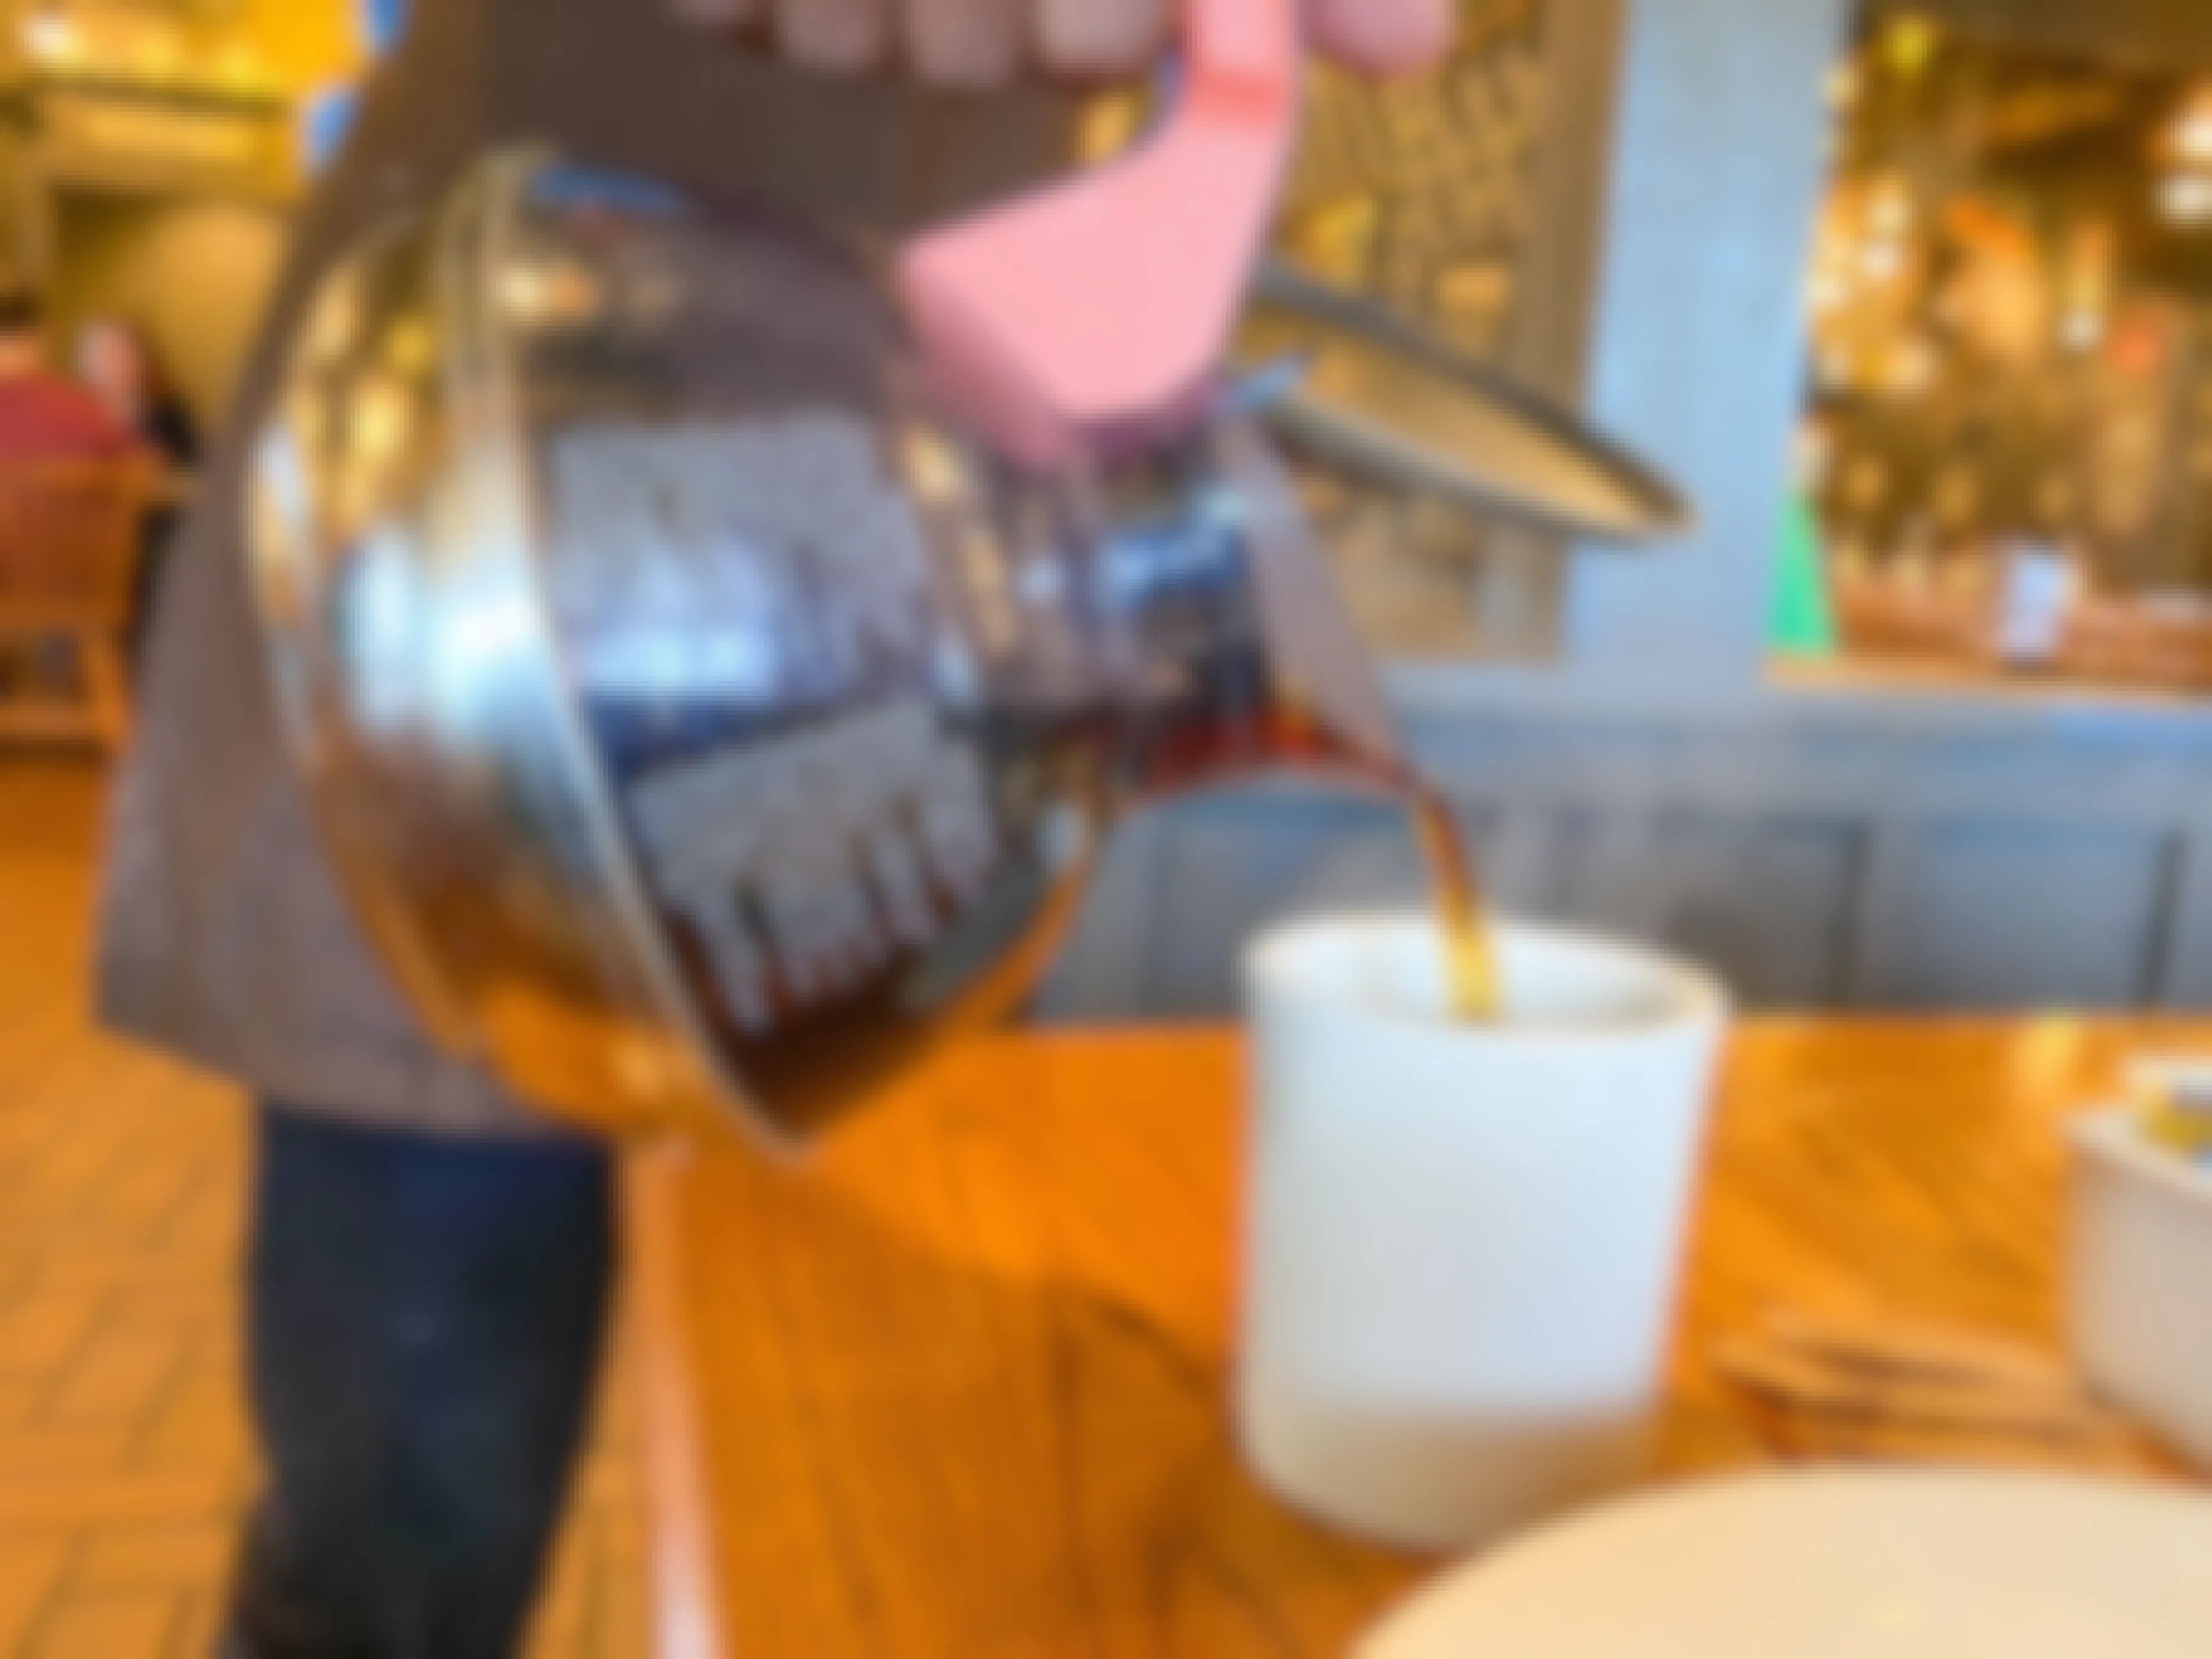 A Cracker Barrel server pouring coffee into a coffee mug at a table at Cracker Barrel.